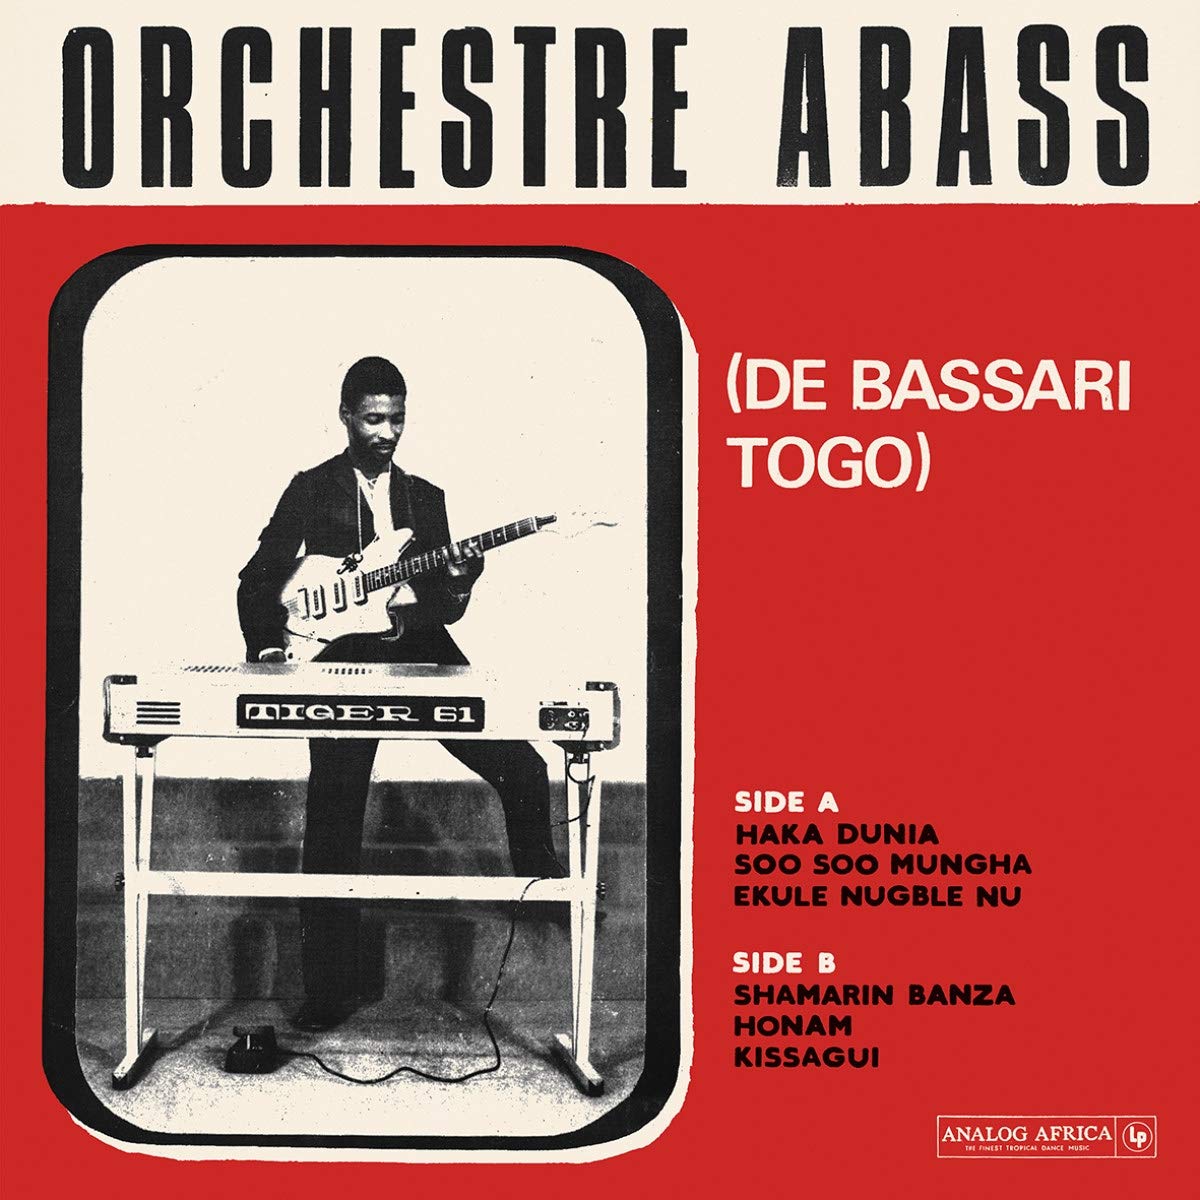 Orchestre Abass - Orchestre Abass De Bassari Togo vinyl cover